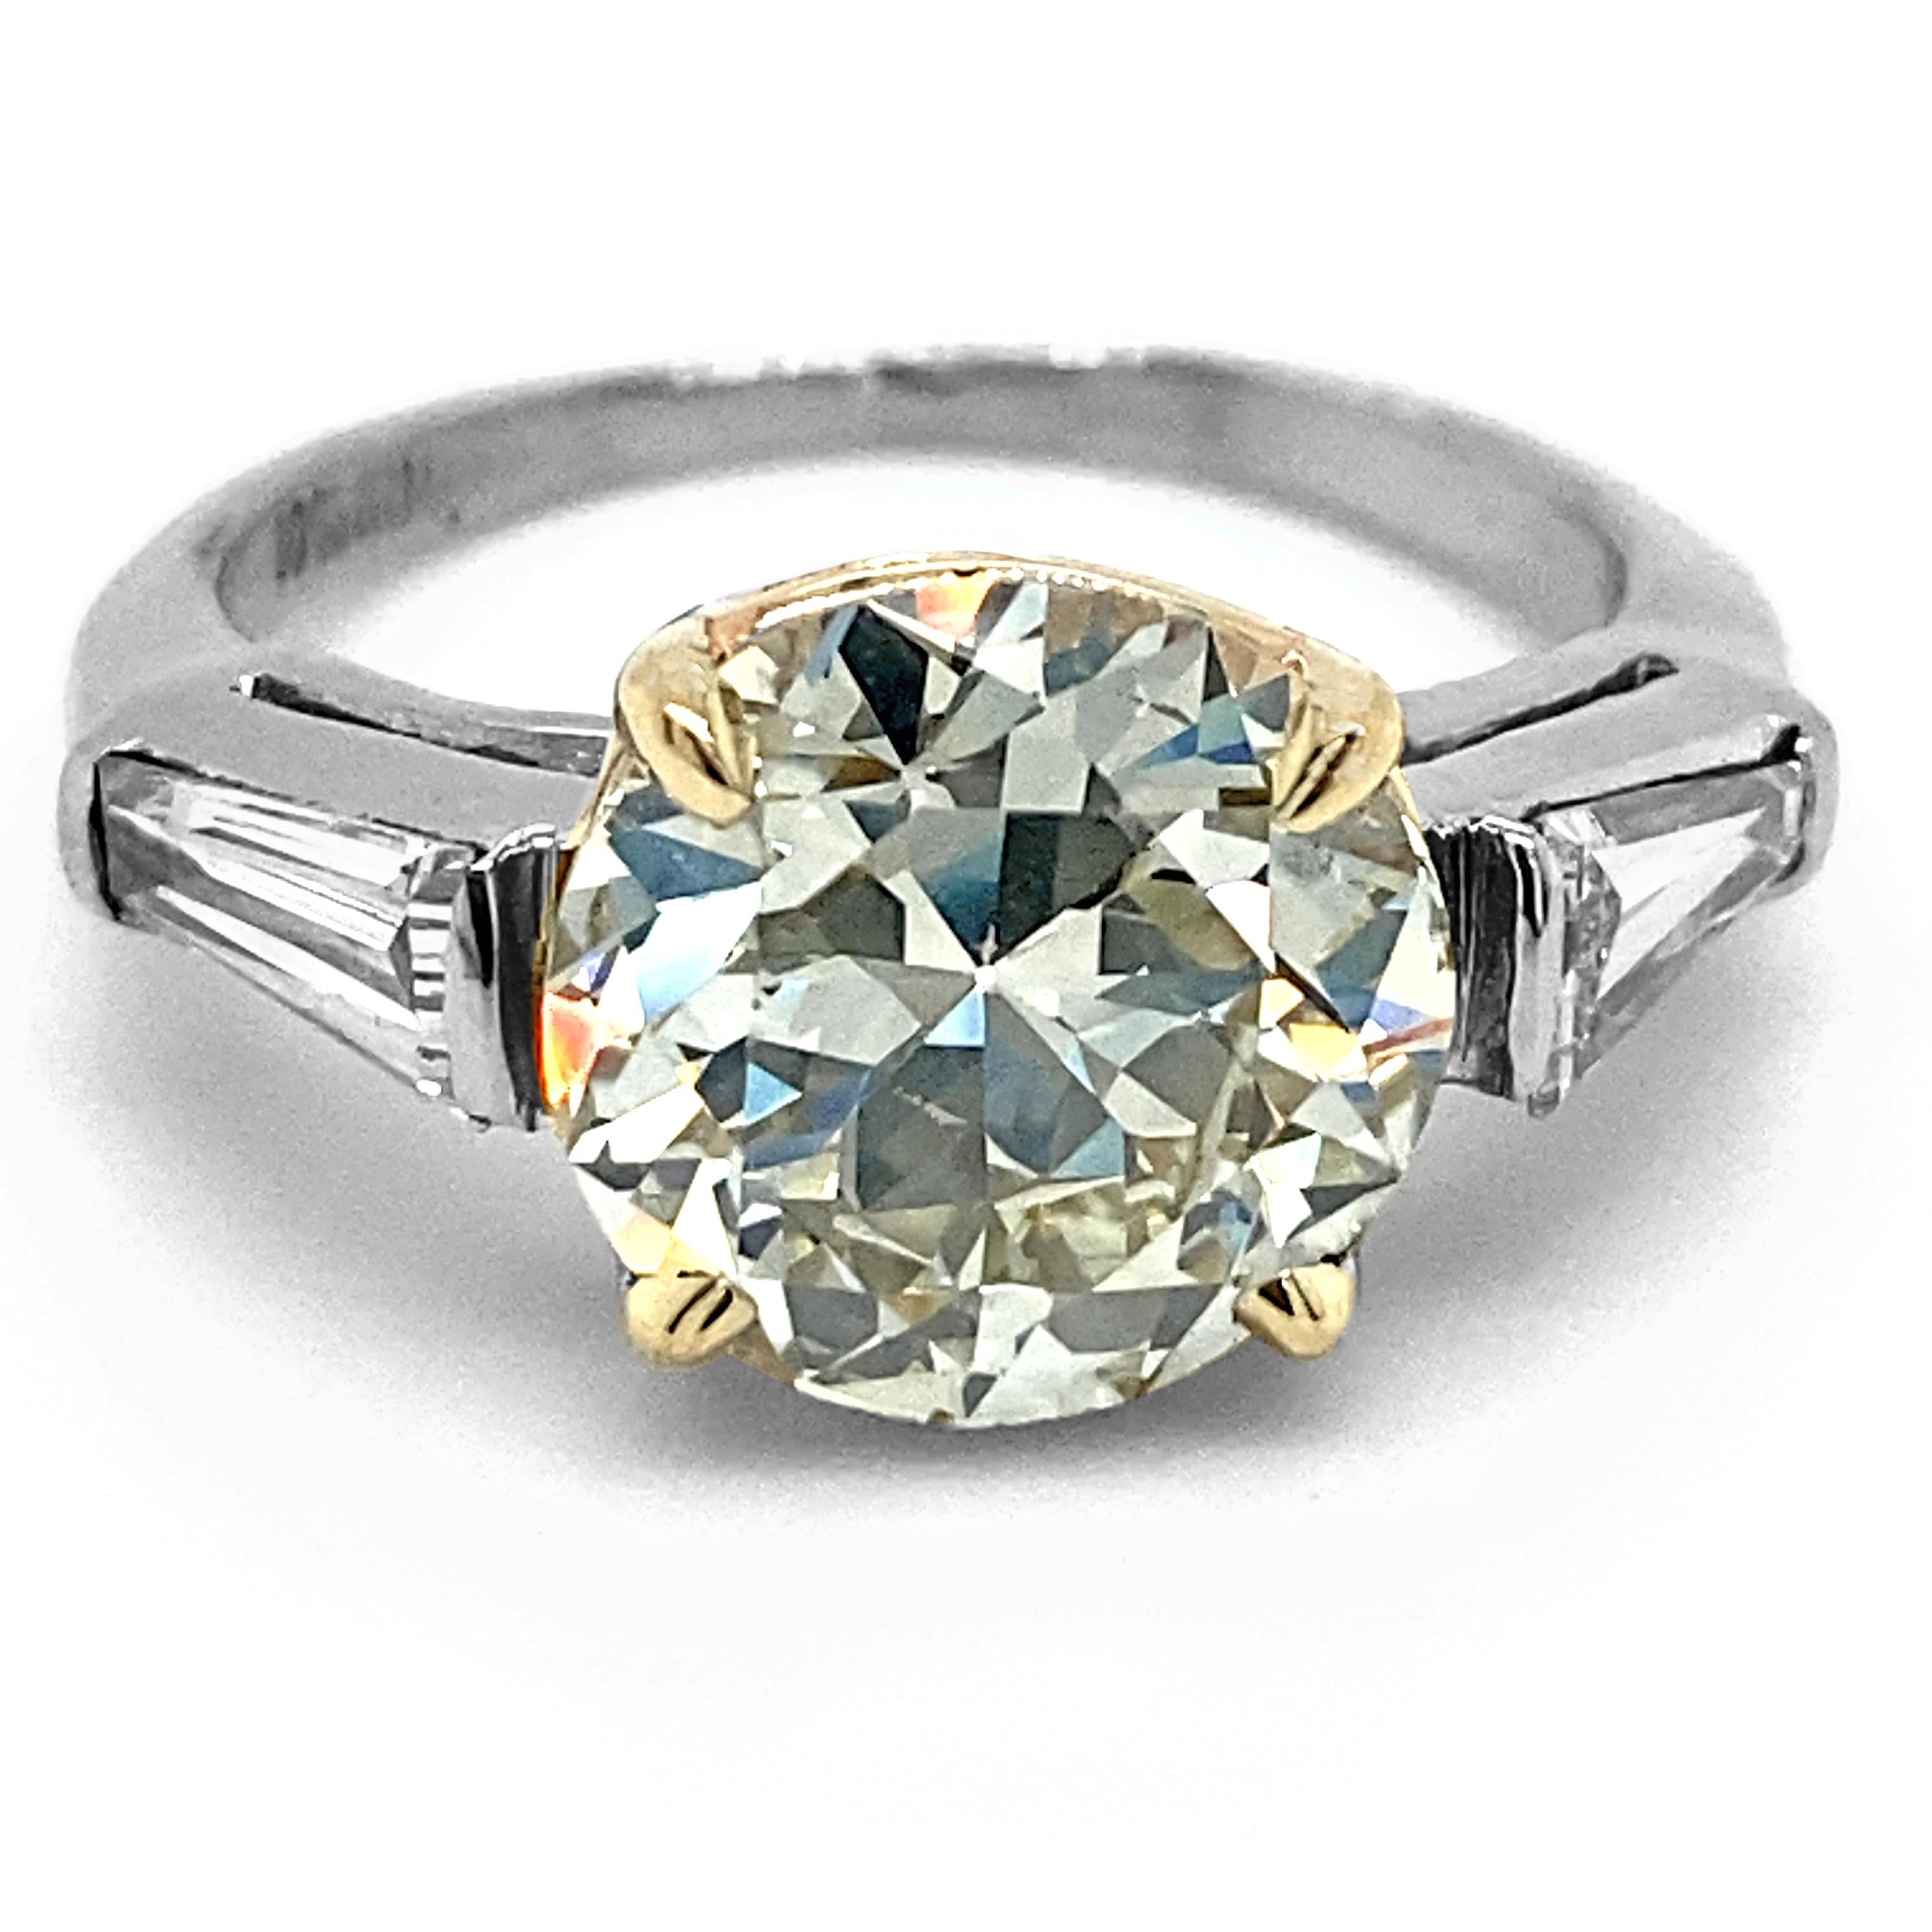 Certified 3.16 Carat Transitional Cut Diamond in Platinum & Gold 3-Stone Ring 4